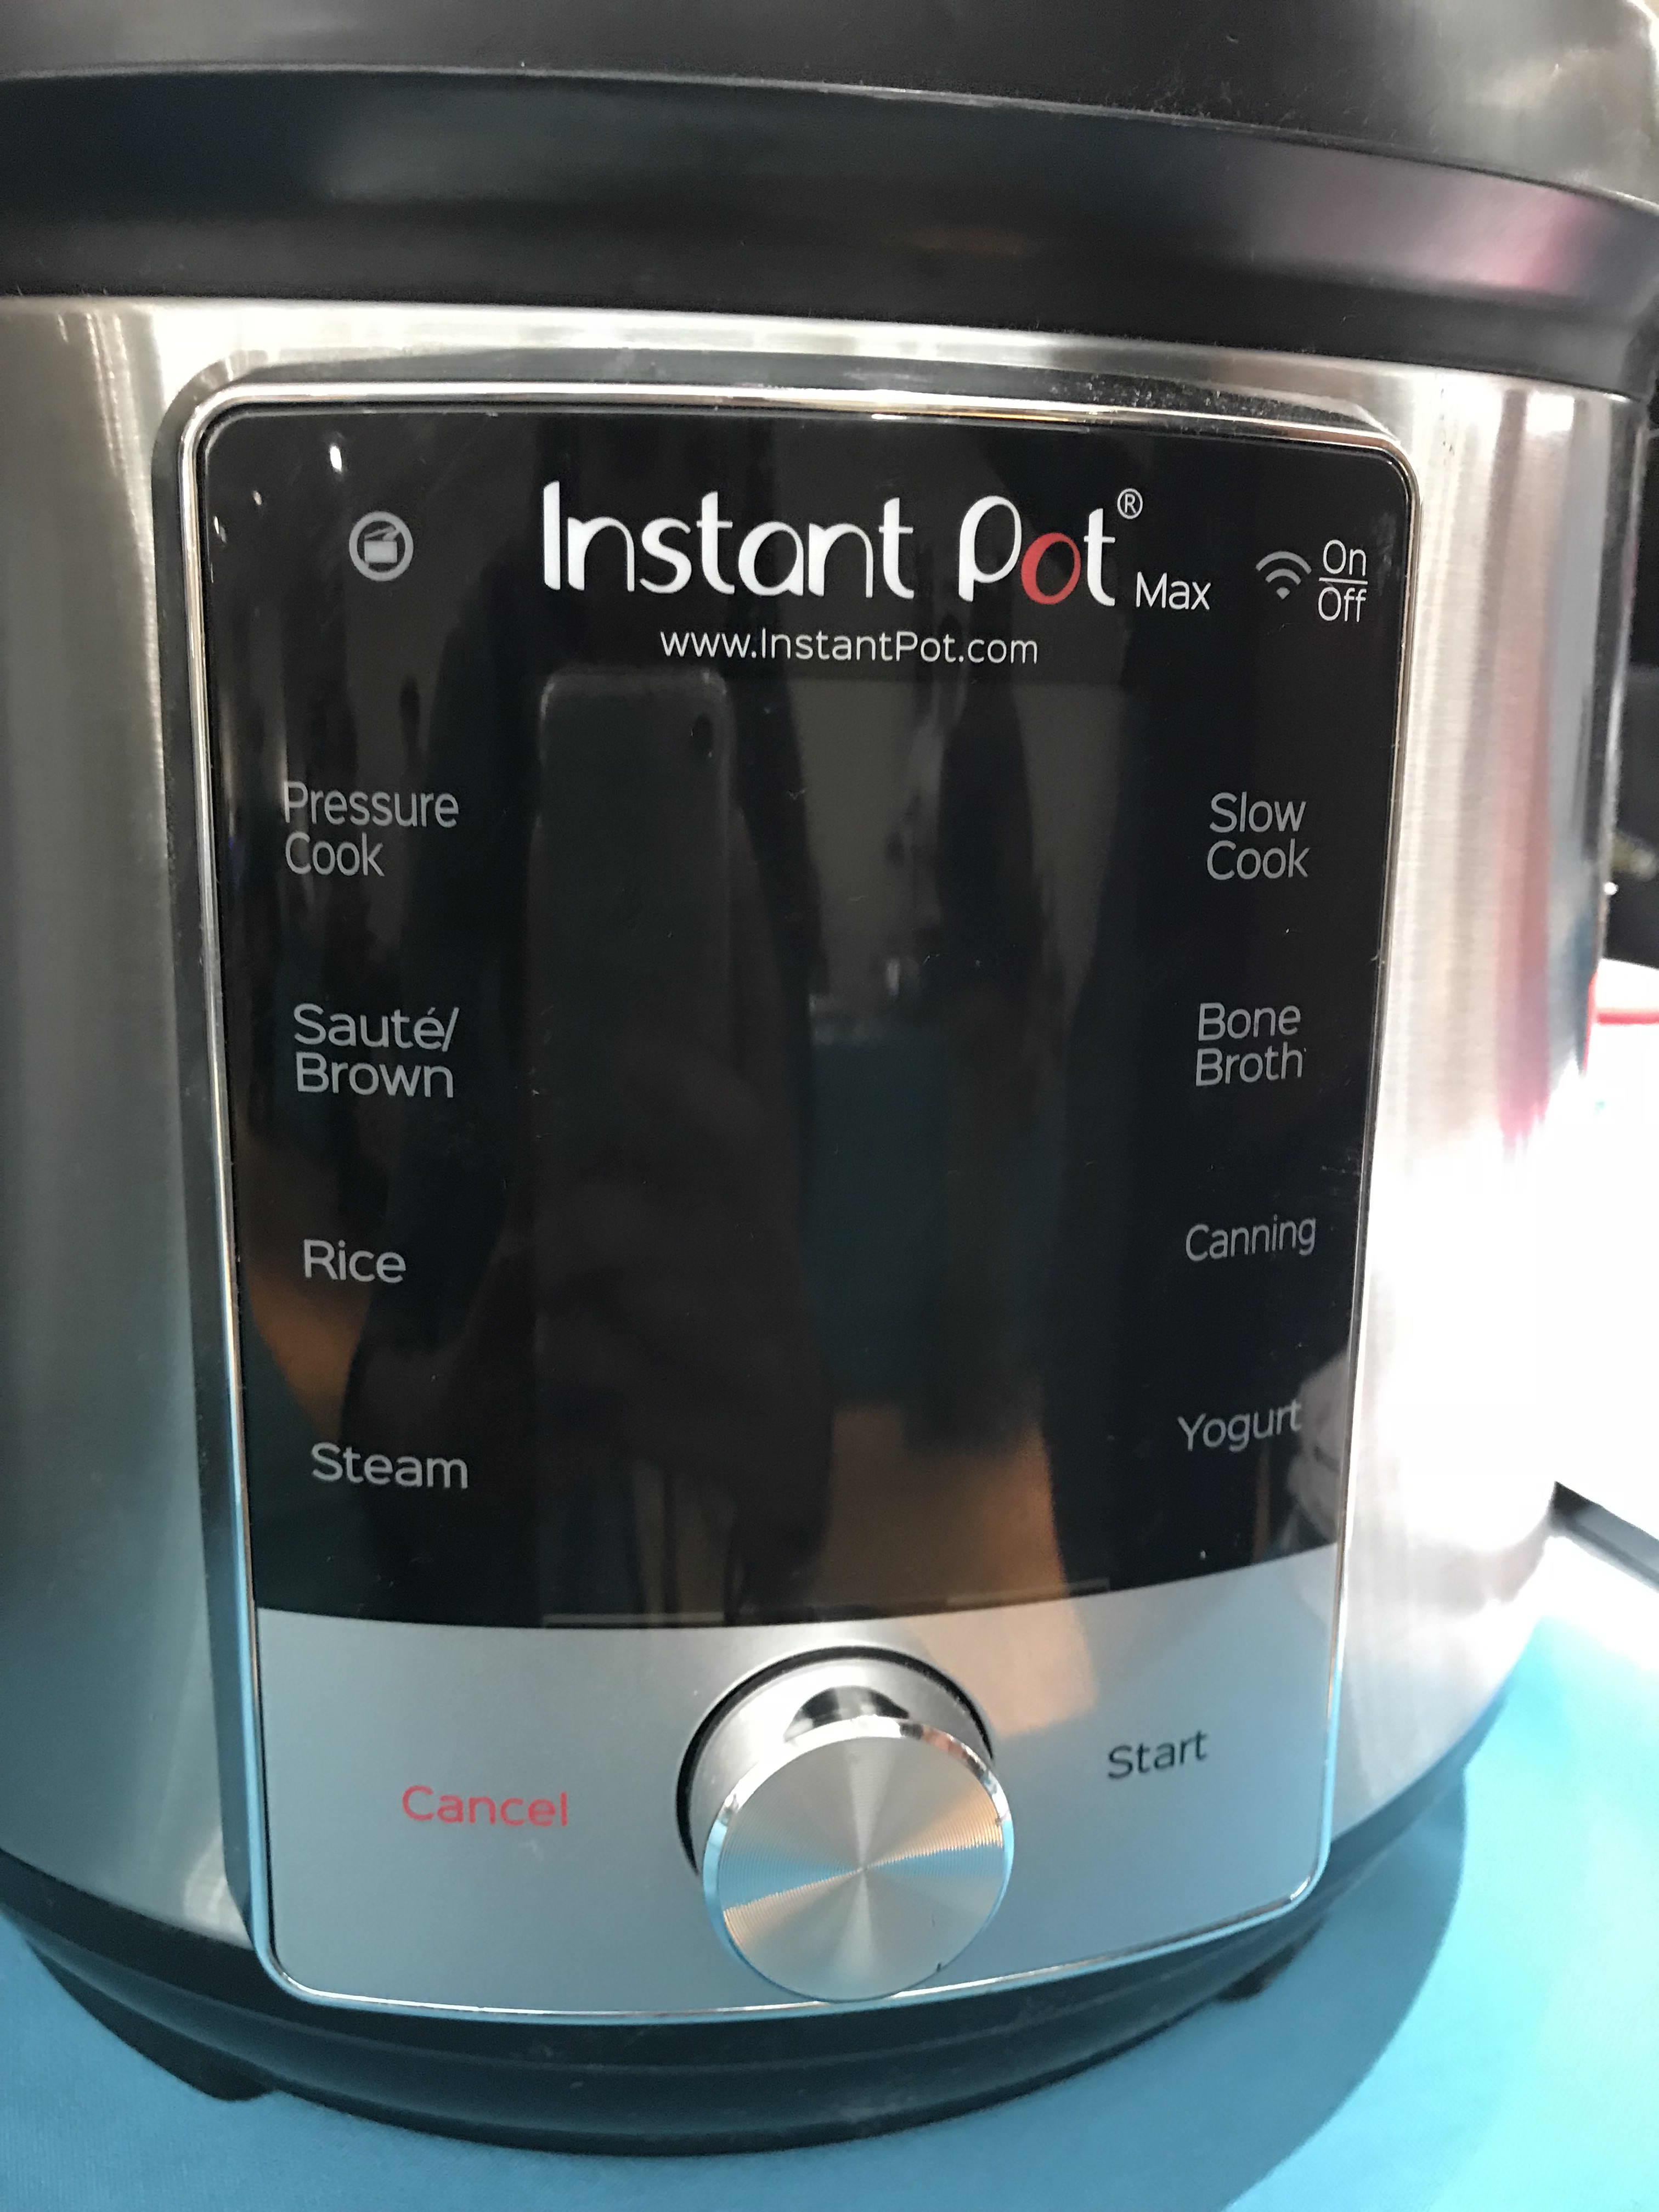 Instant Pot Max 2018 - New Model Features High Pressure